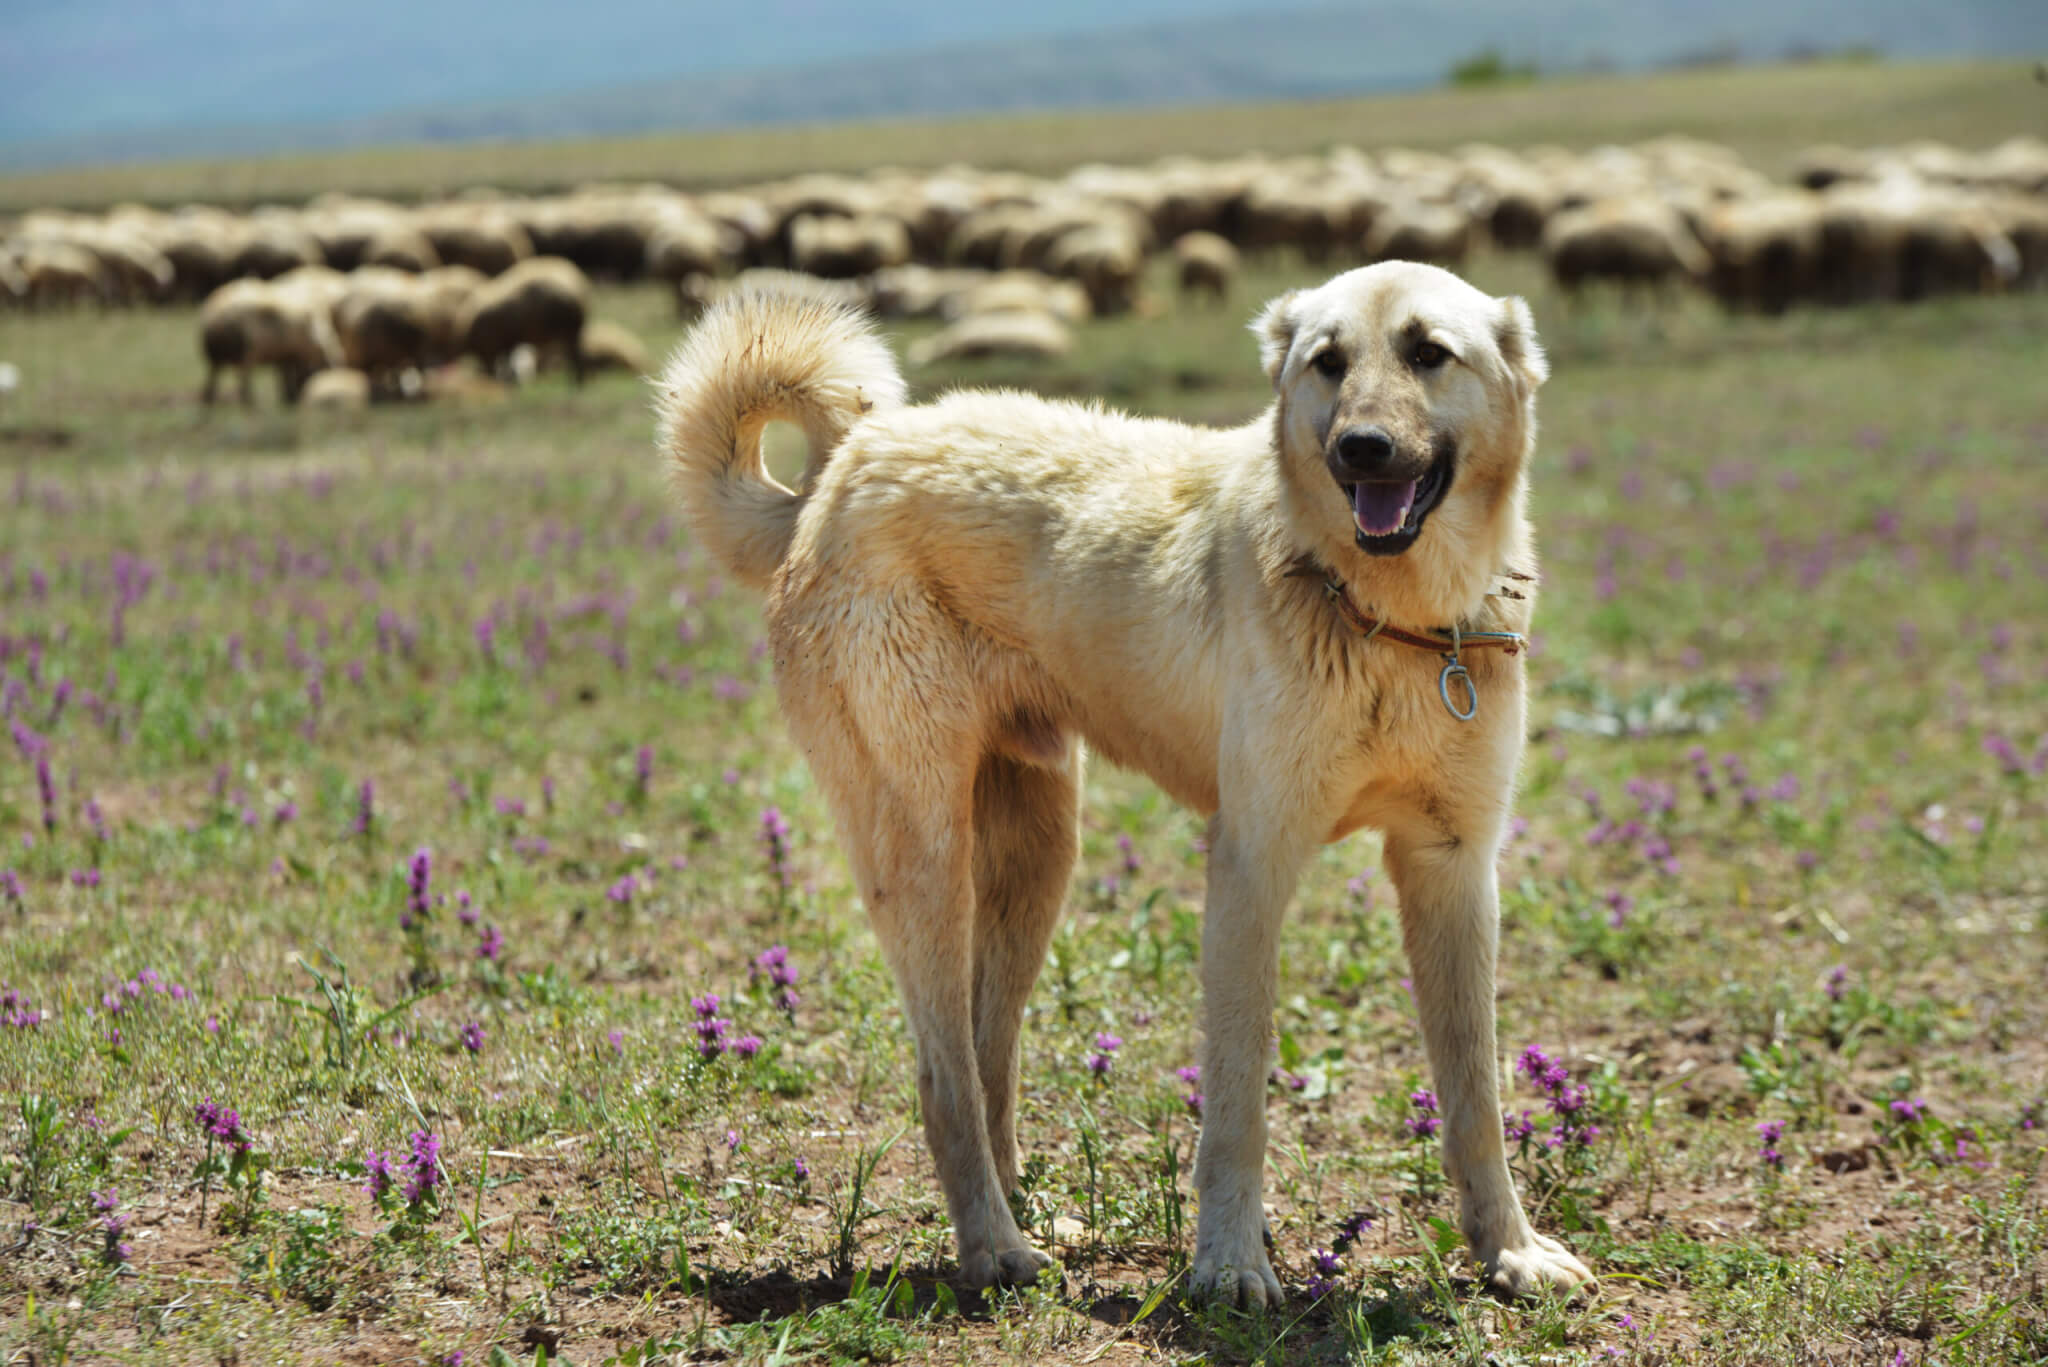 Kangal dog on a sheep farm in Turkey